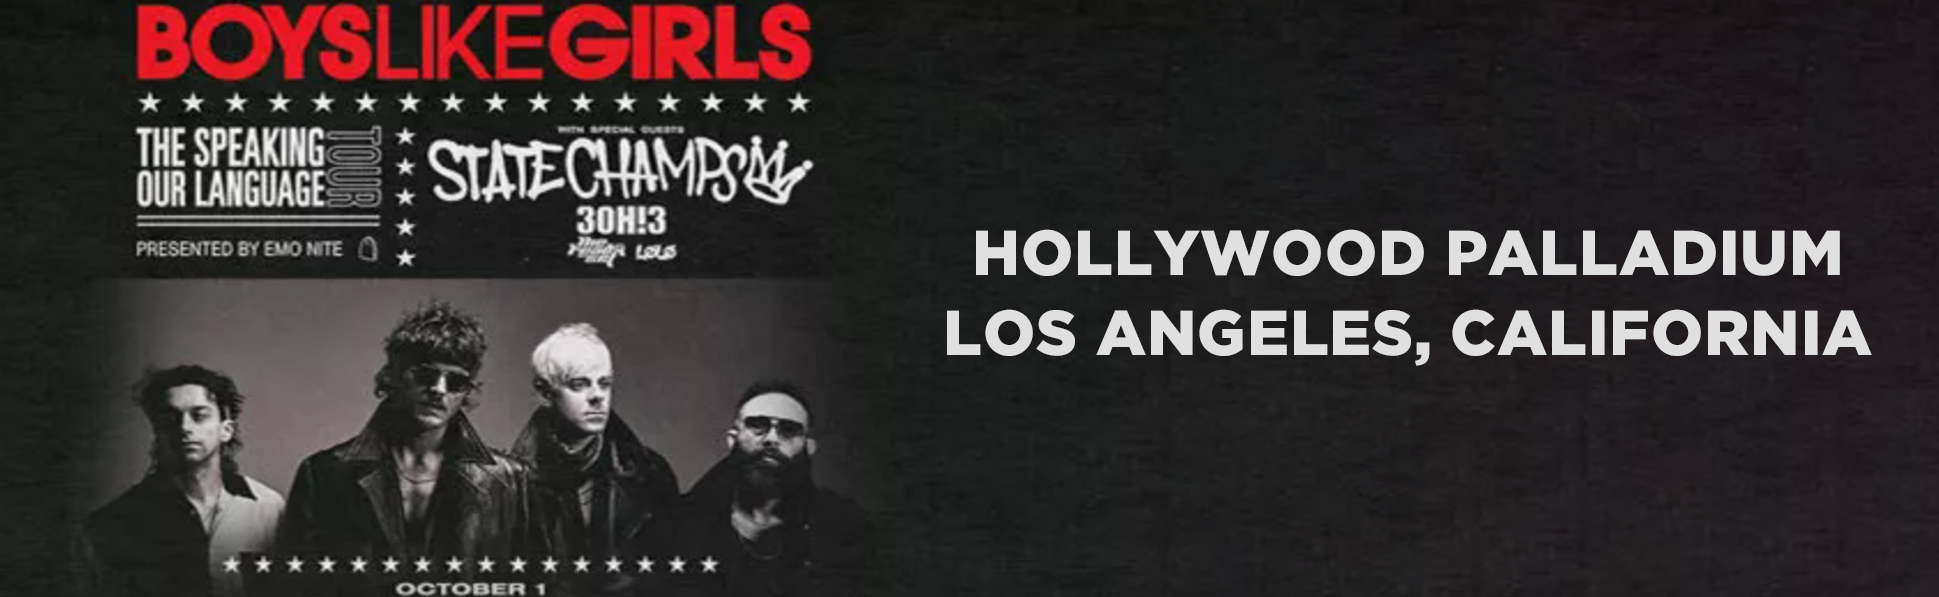 Boys Like Girls at Hollywood Palladium